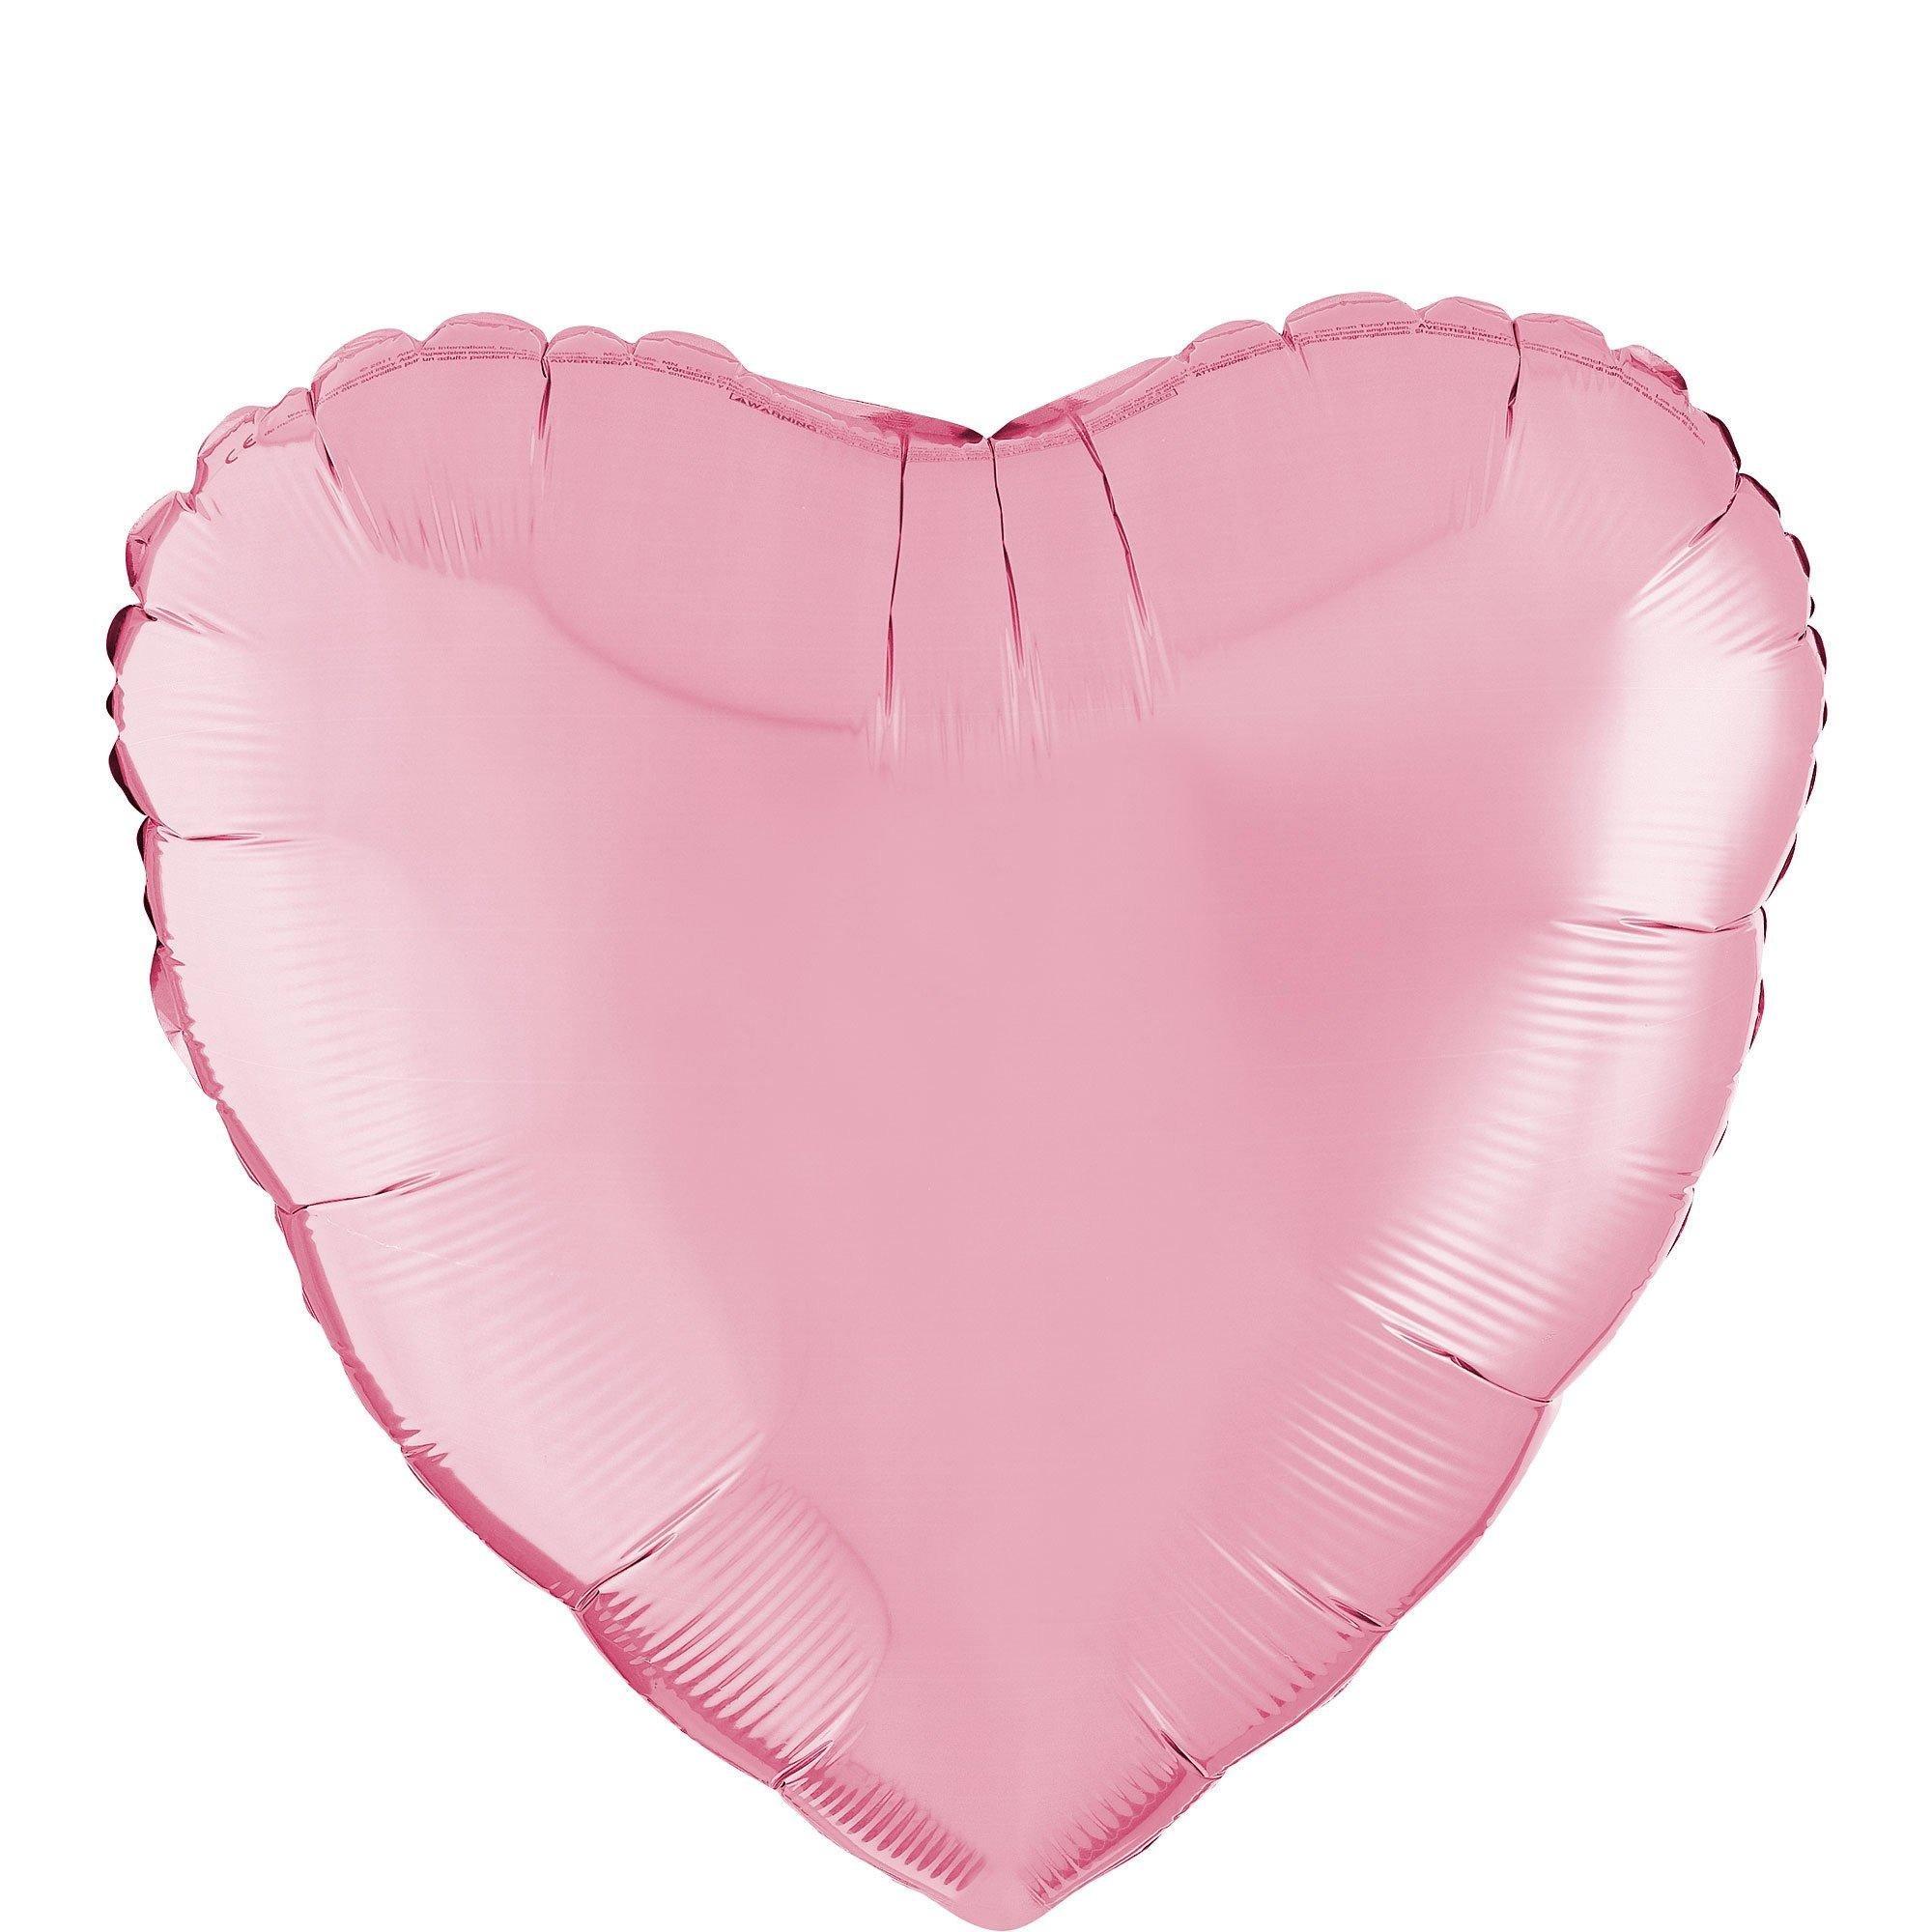 Red & Pink Foil Heart Balloon Bouquet, 12pc